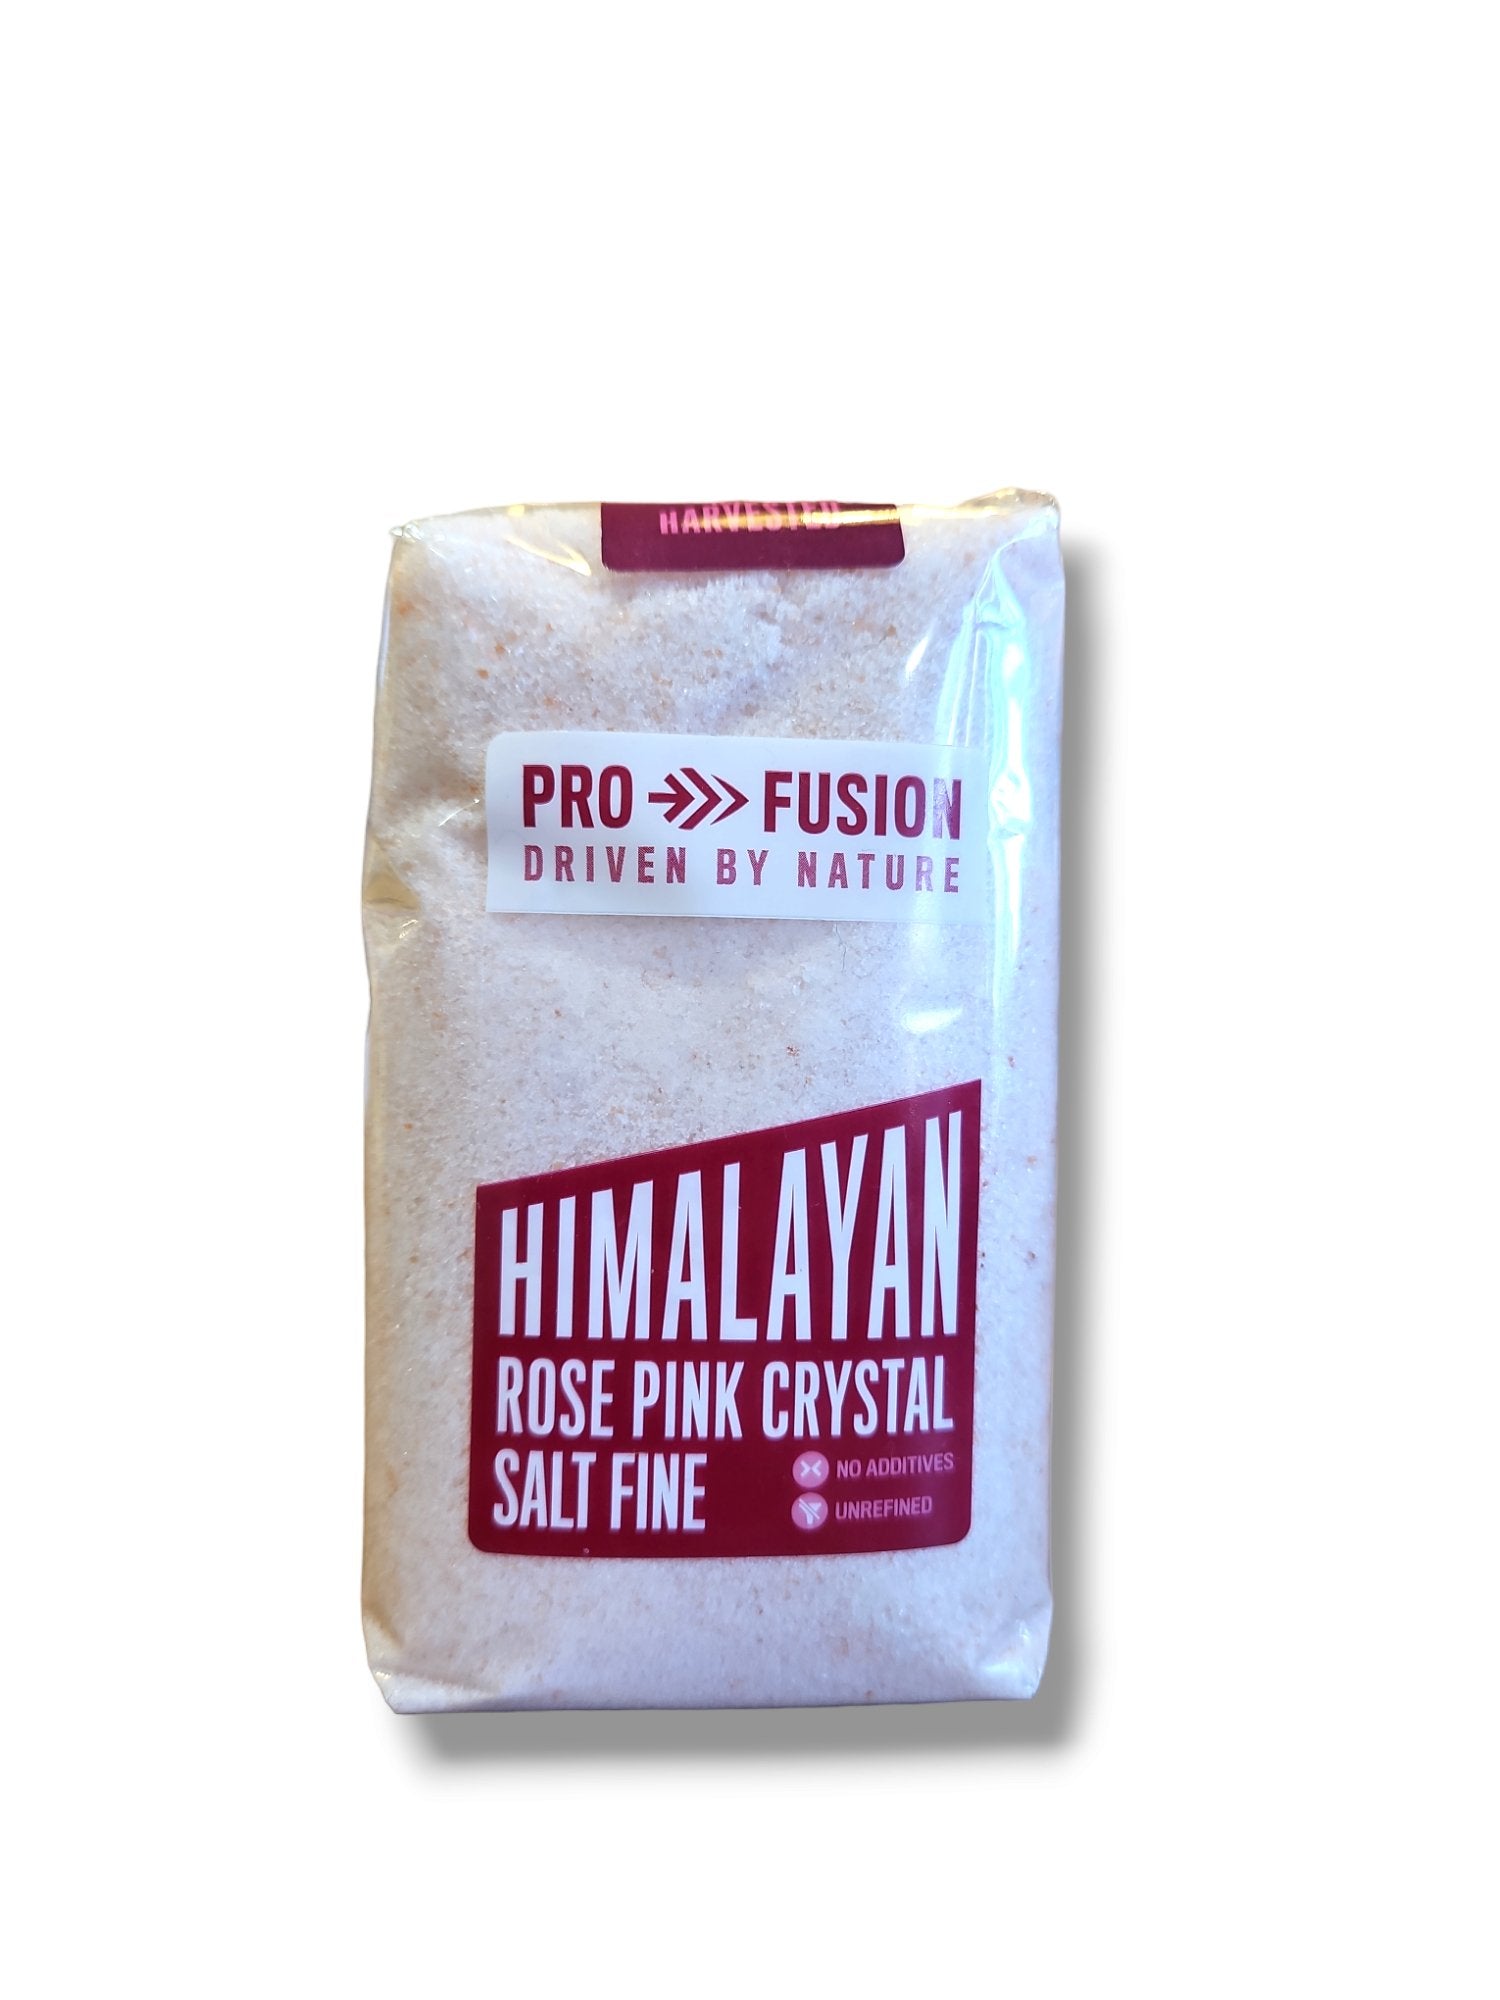 Pro Fusion Himalayan Rose Pink Crystal Salt Fine 500g - Healthy Living